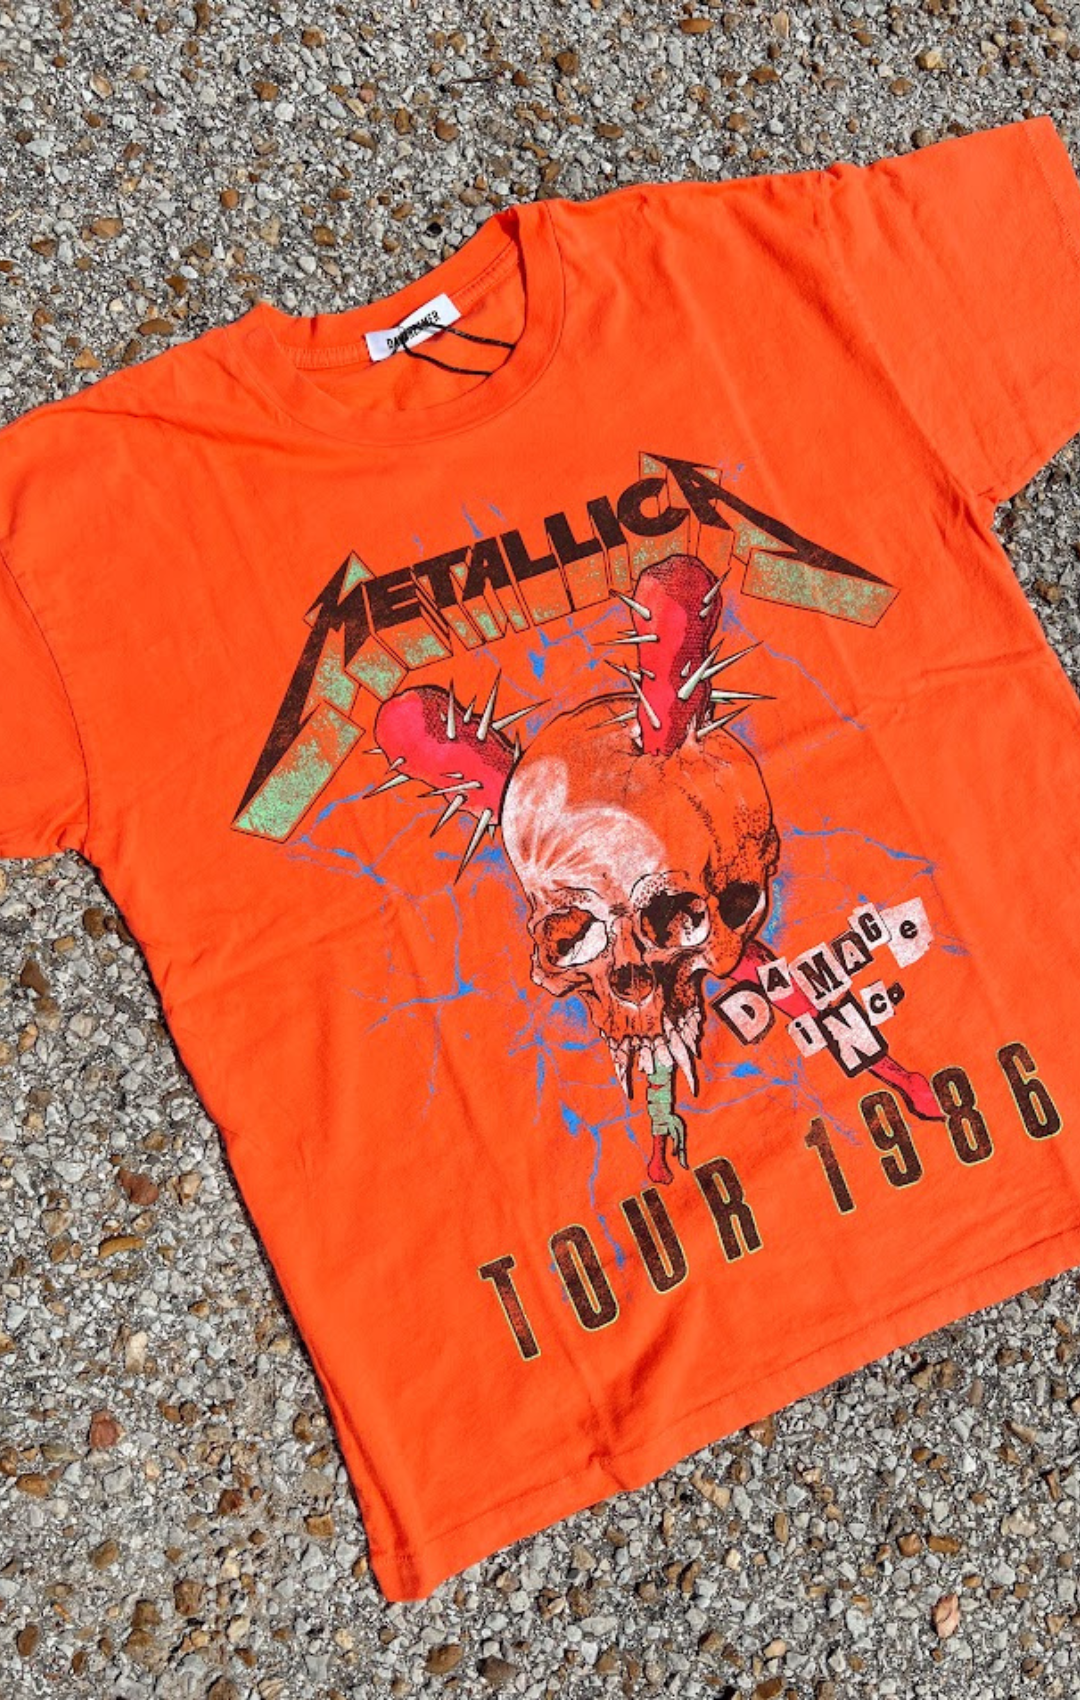 Metallica Damage Inc Tour 1986 Daydreamer Tee